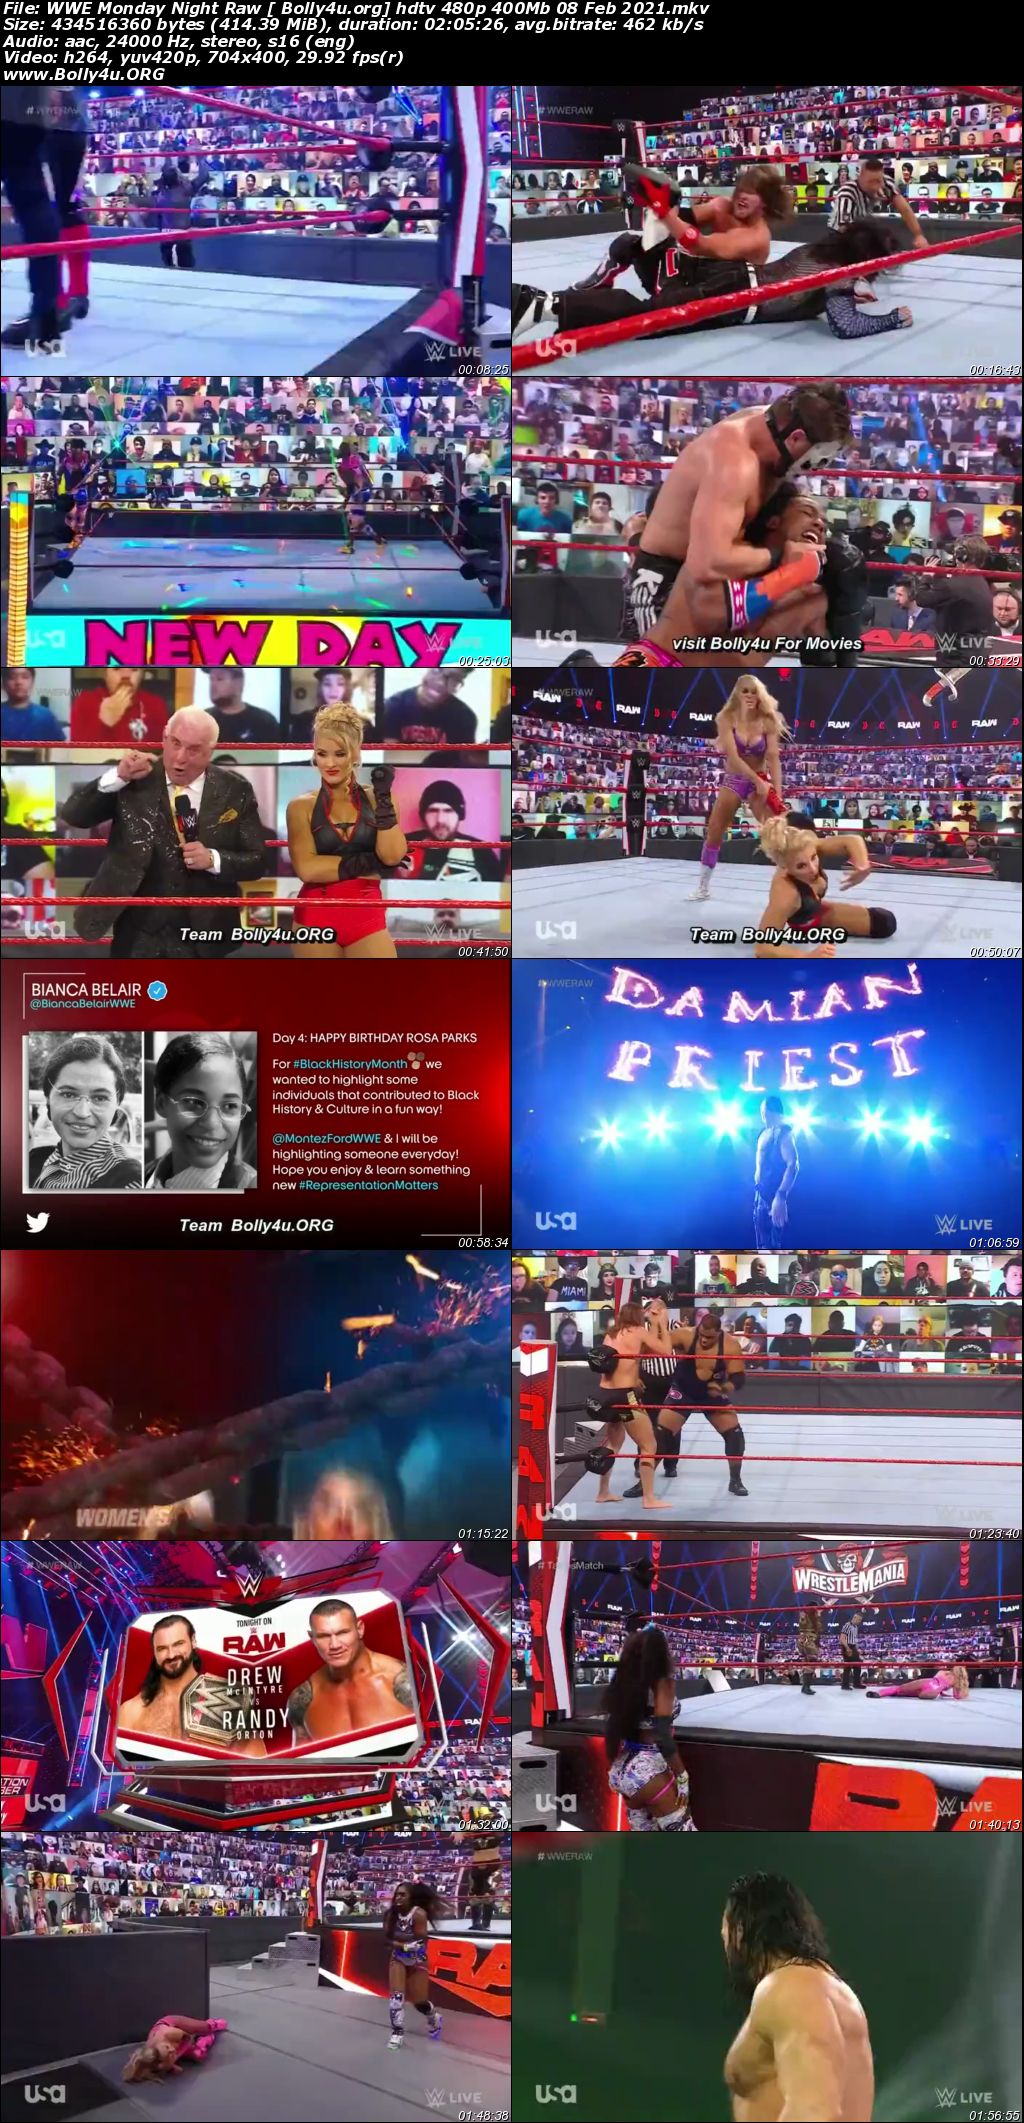 WWE Monday Night Raw HDTV 480p 400Mb 08 Feb 2021 Download